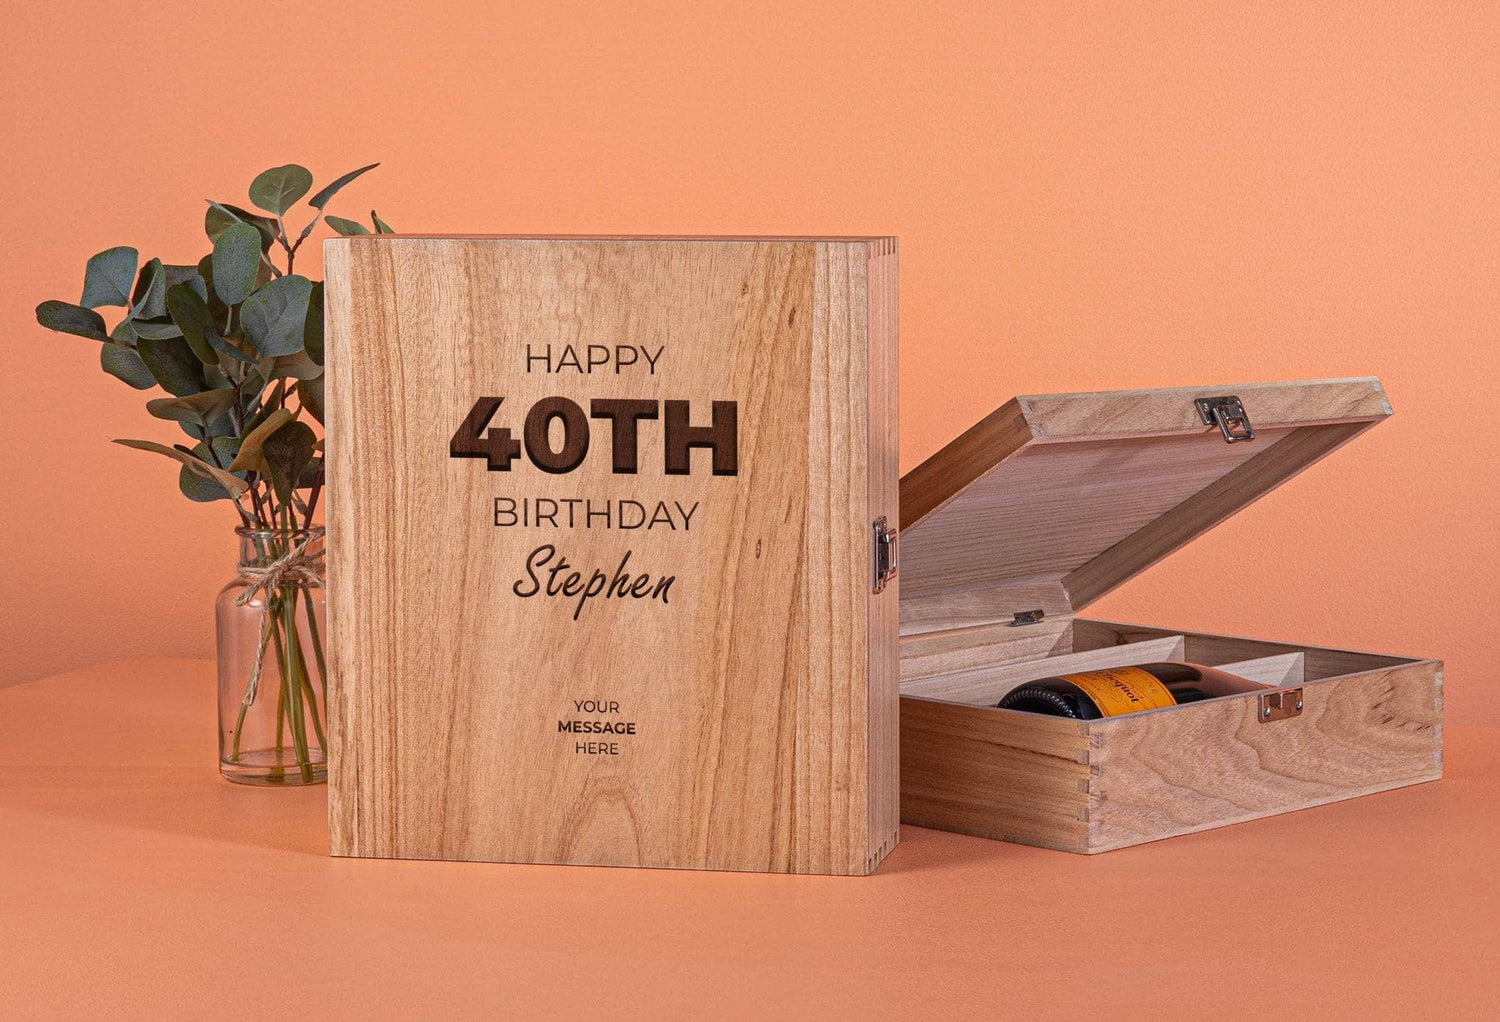 Peach Hampers Personal Hampers Three Bottle Engraved Happy Birthday Wine Box